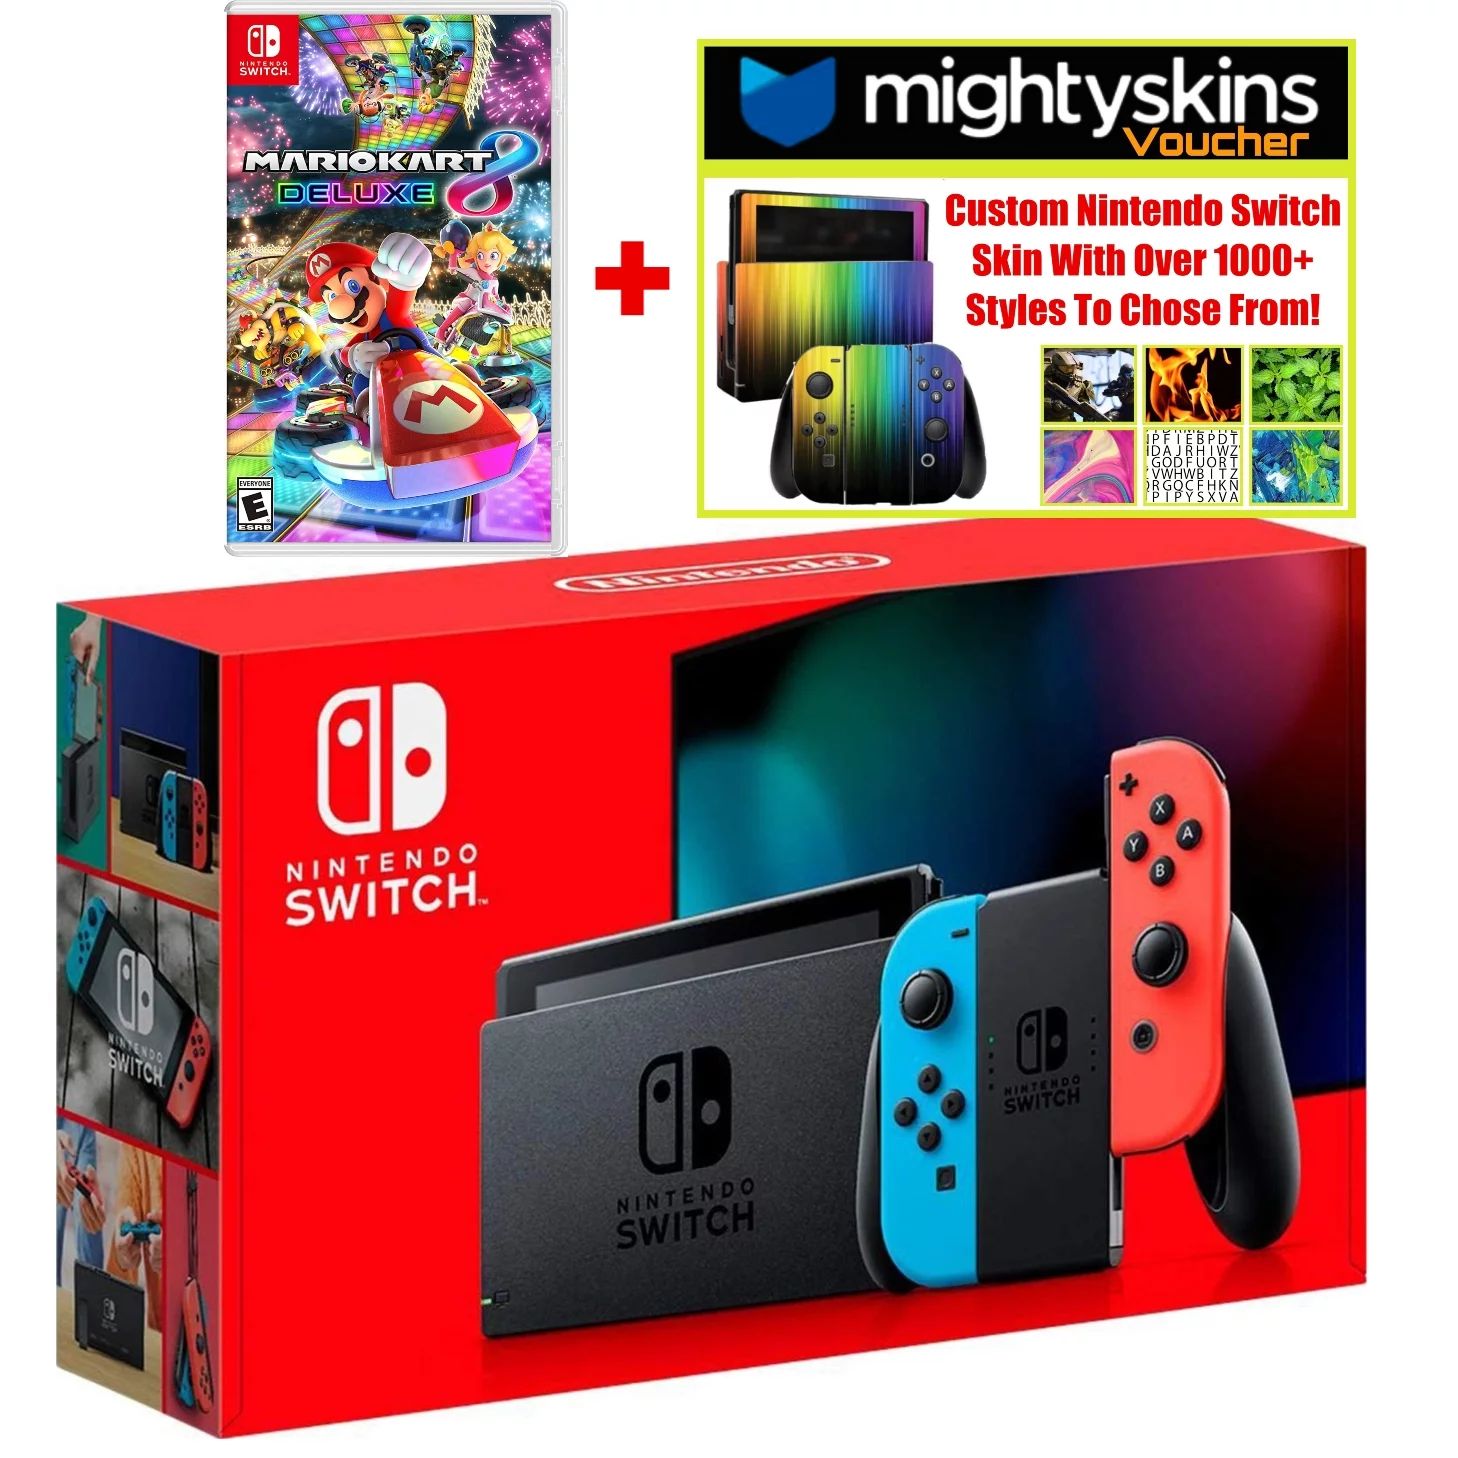 Nintendo Switch w/ Neon Blue & Neon Red Joy-Con + Mario Kart 8 Deluxe & MightySkins Voucher - Lim... | Walmart (US)